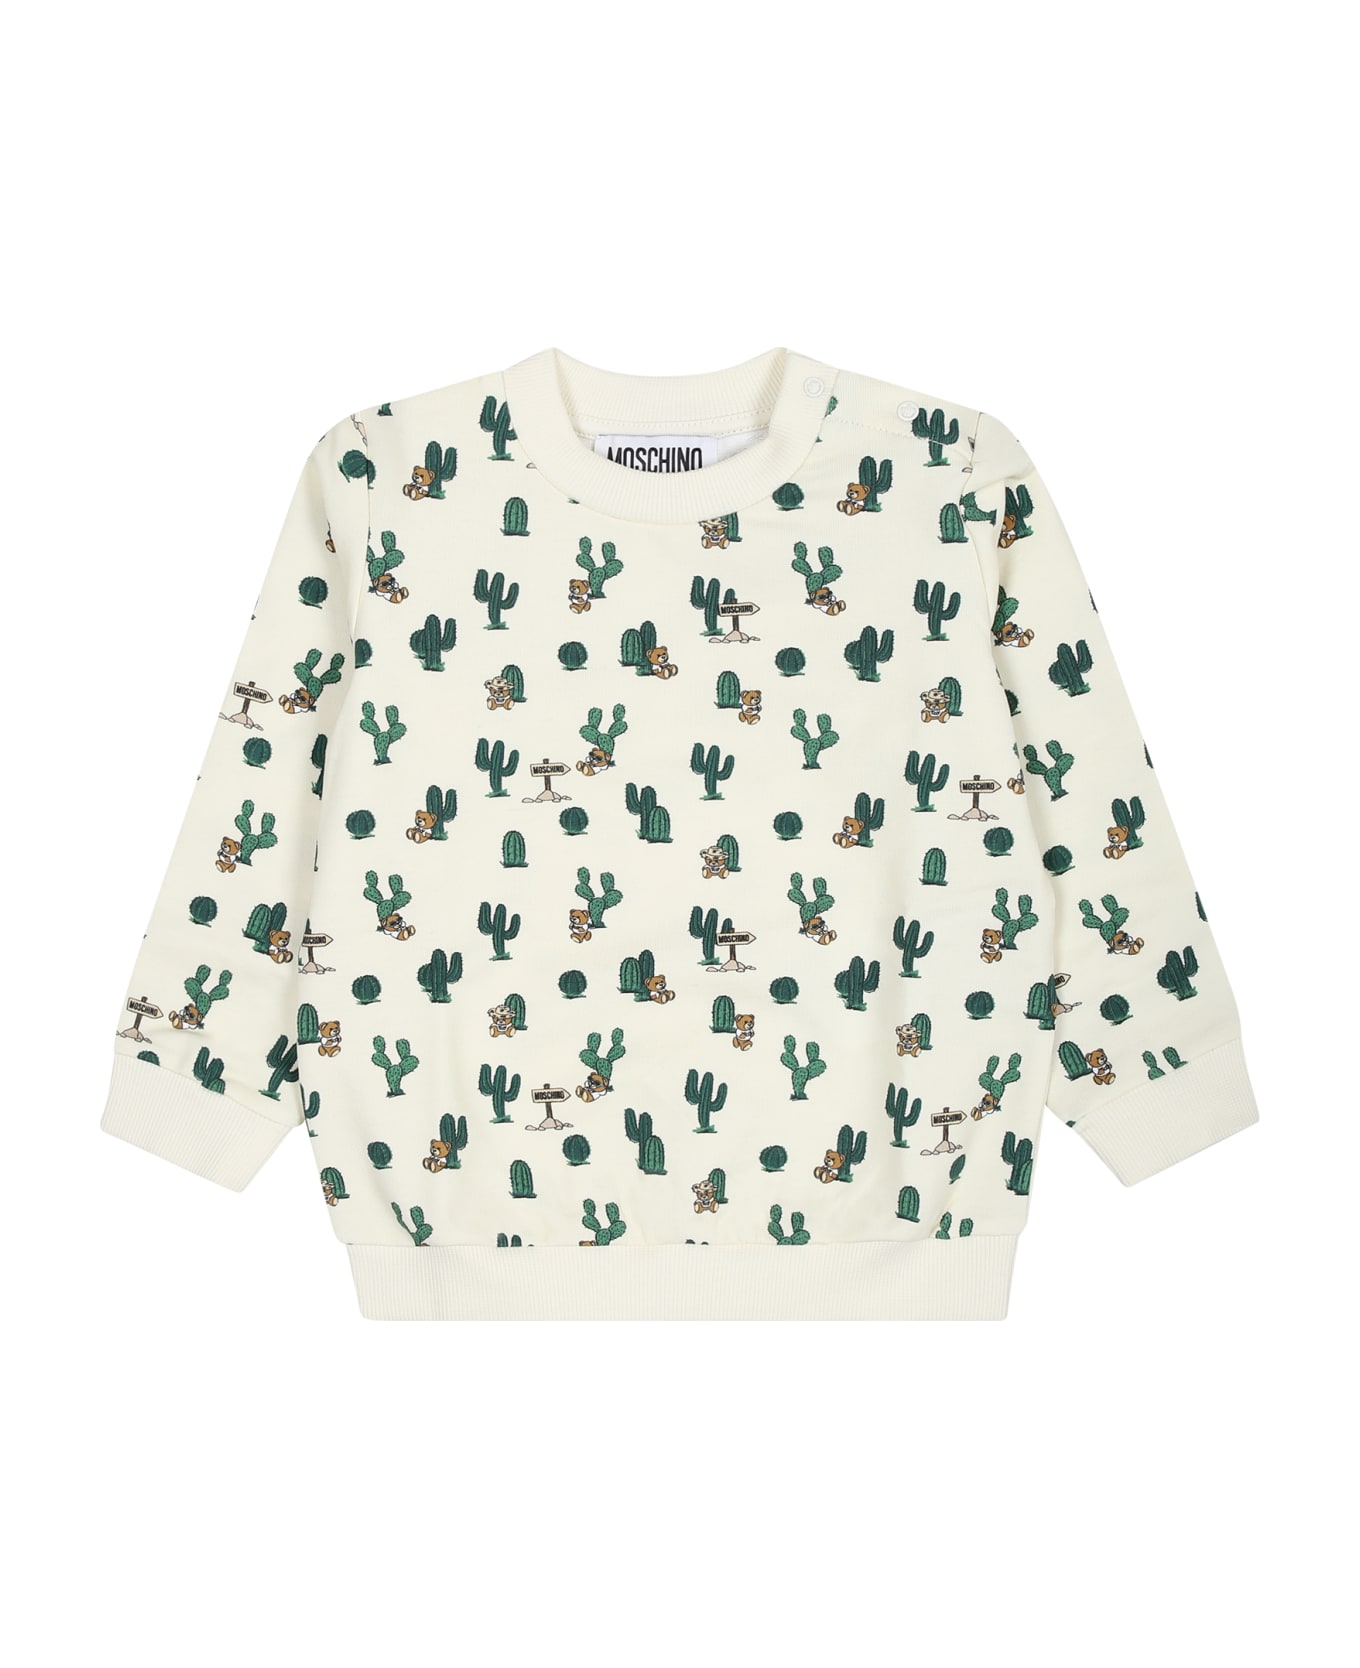 Moschino Ivory Sweatshirt For Baby Boy With Teddy Bear And Cactus - Ivory ニットウェア＆スウェットシャツ